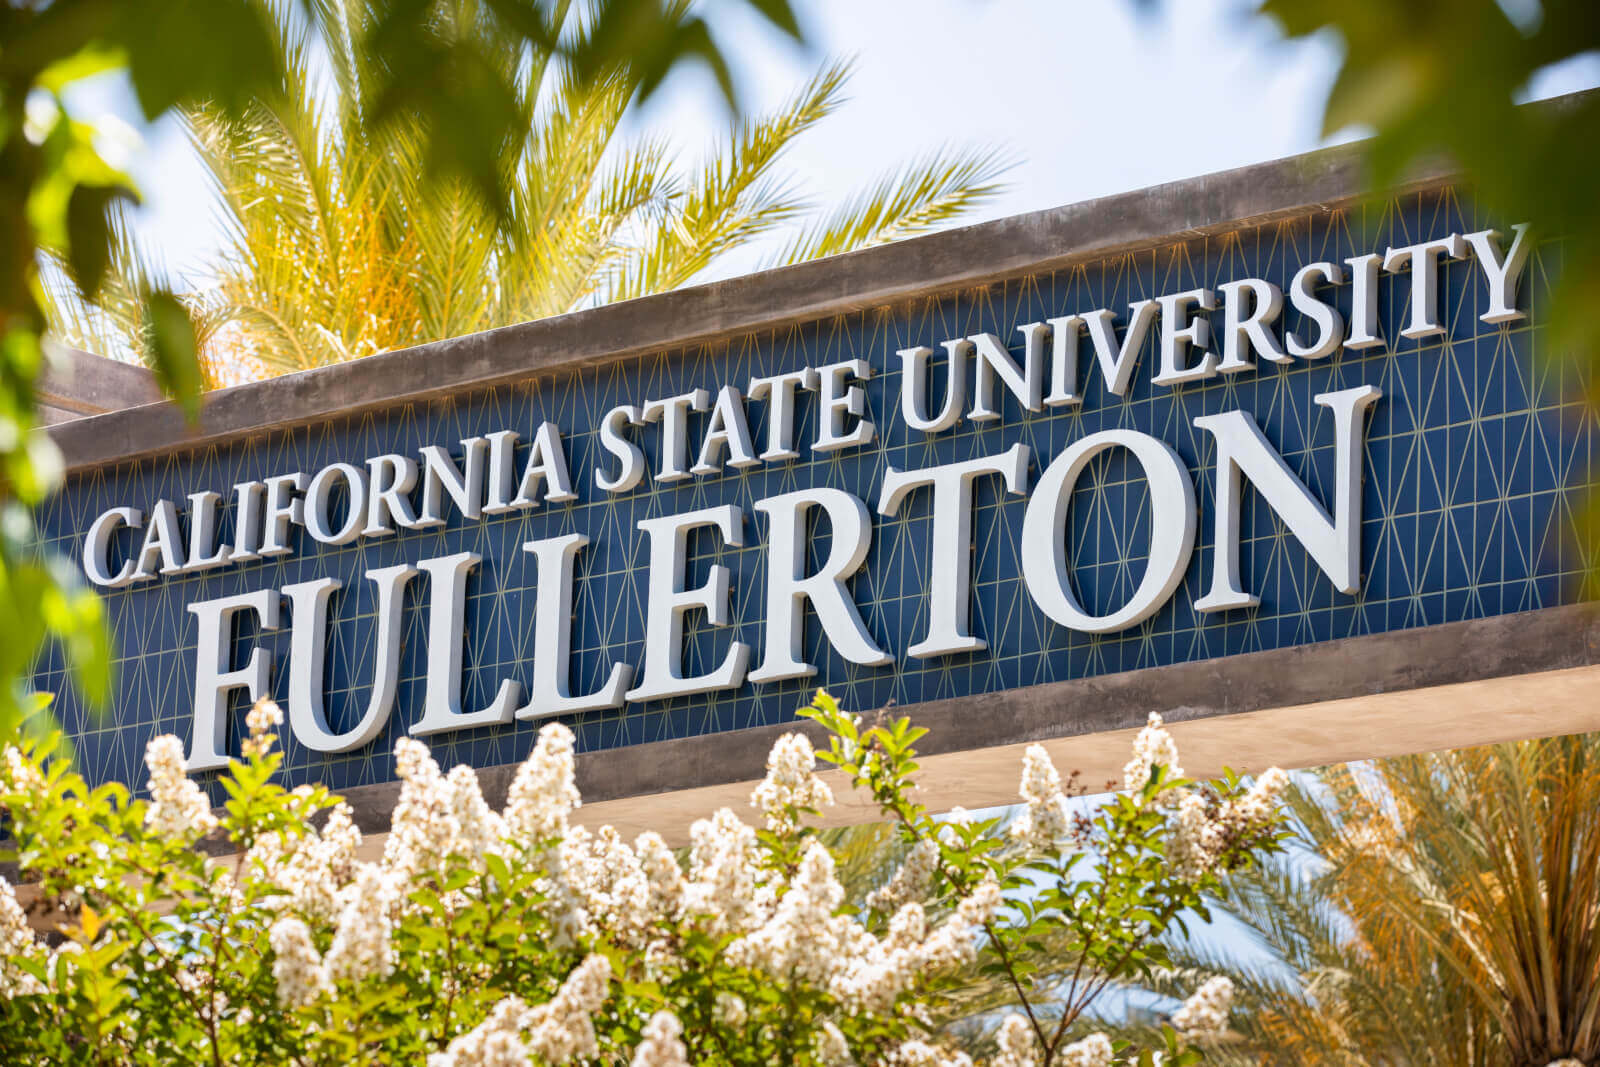 About California State University, Fullerton (CSUF)